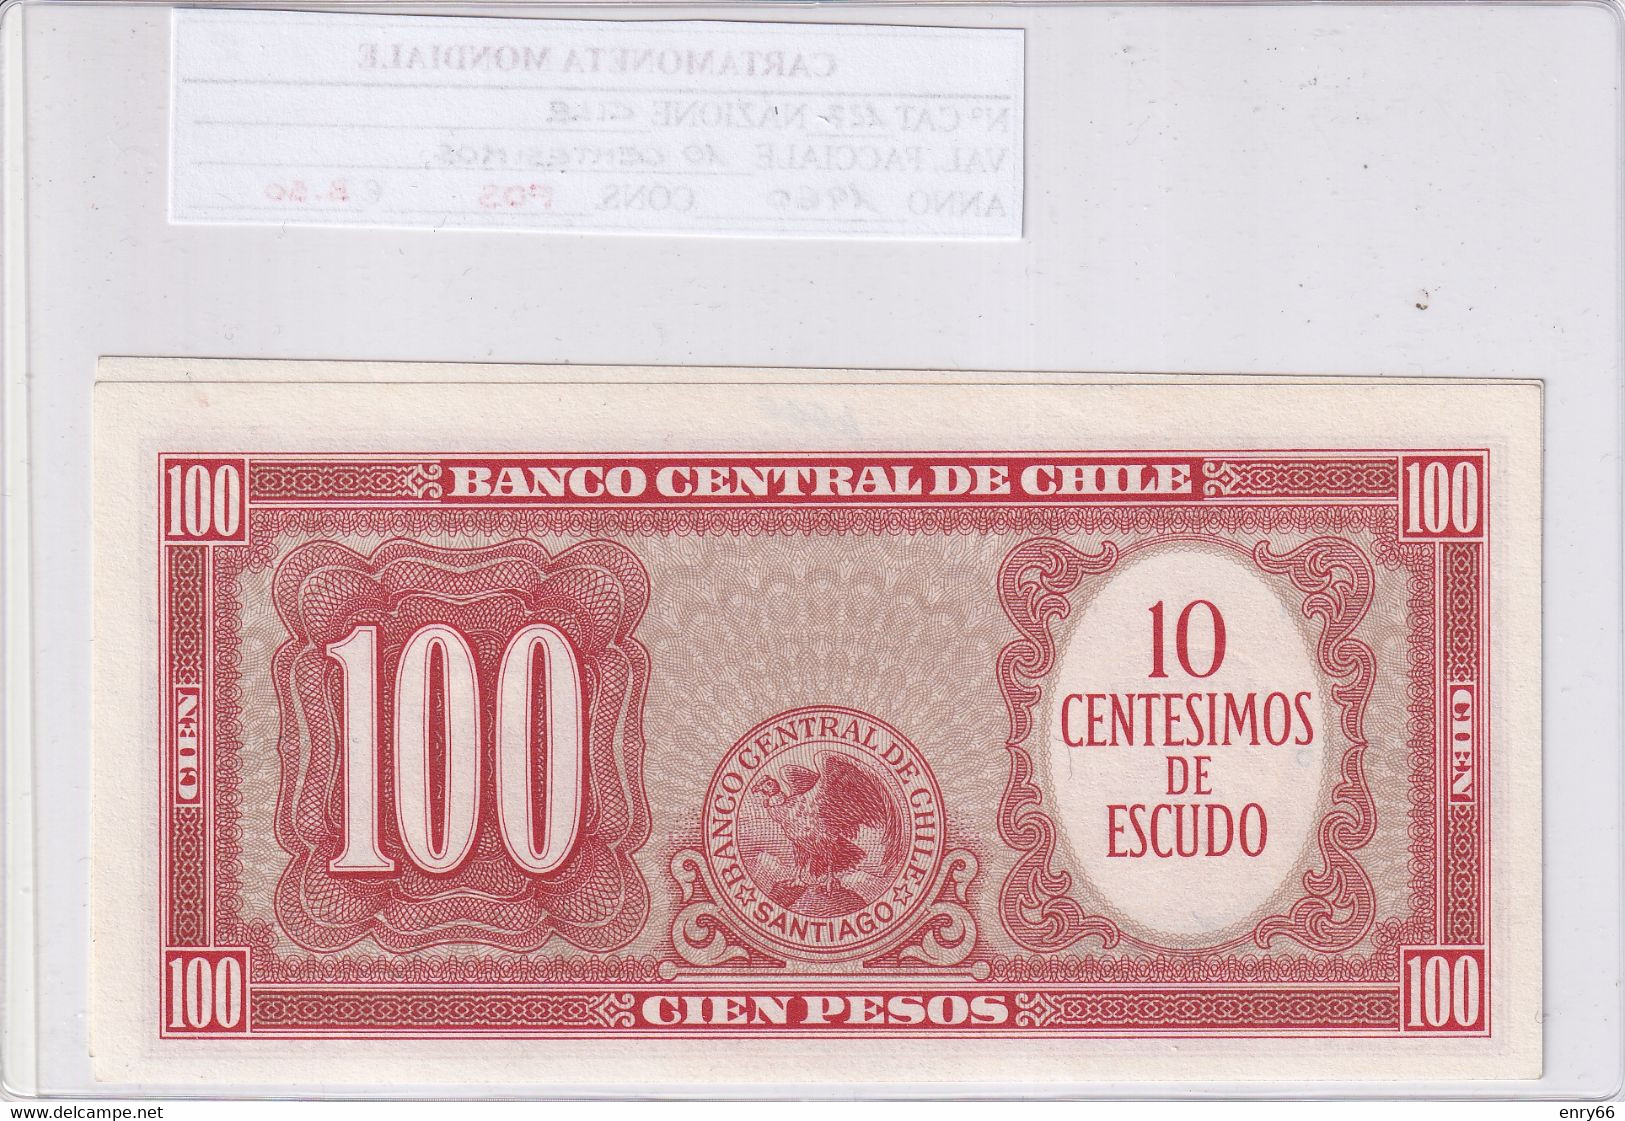 CILE 100 PESOS 1960 P127 - Chile